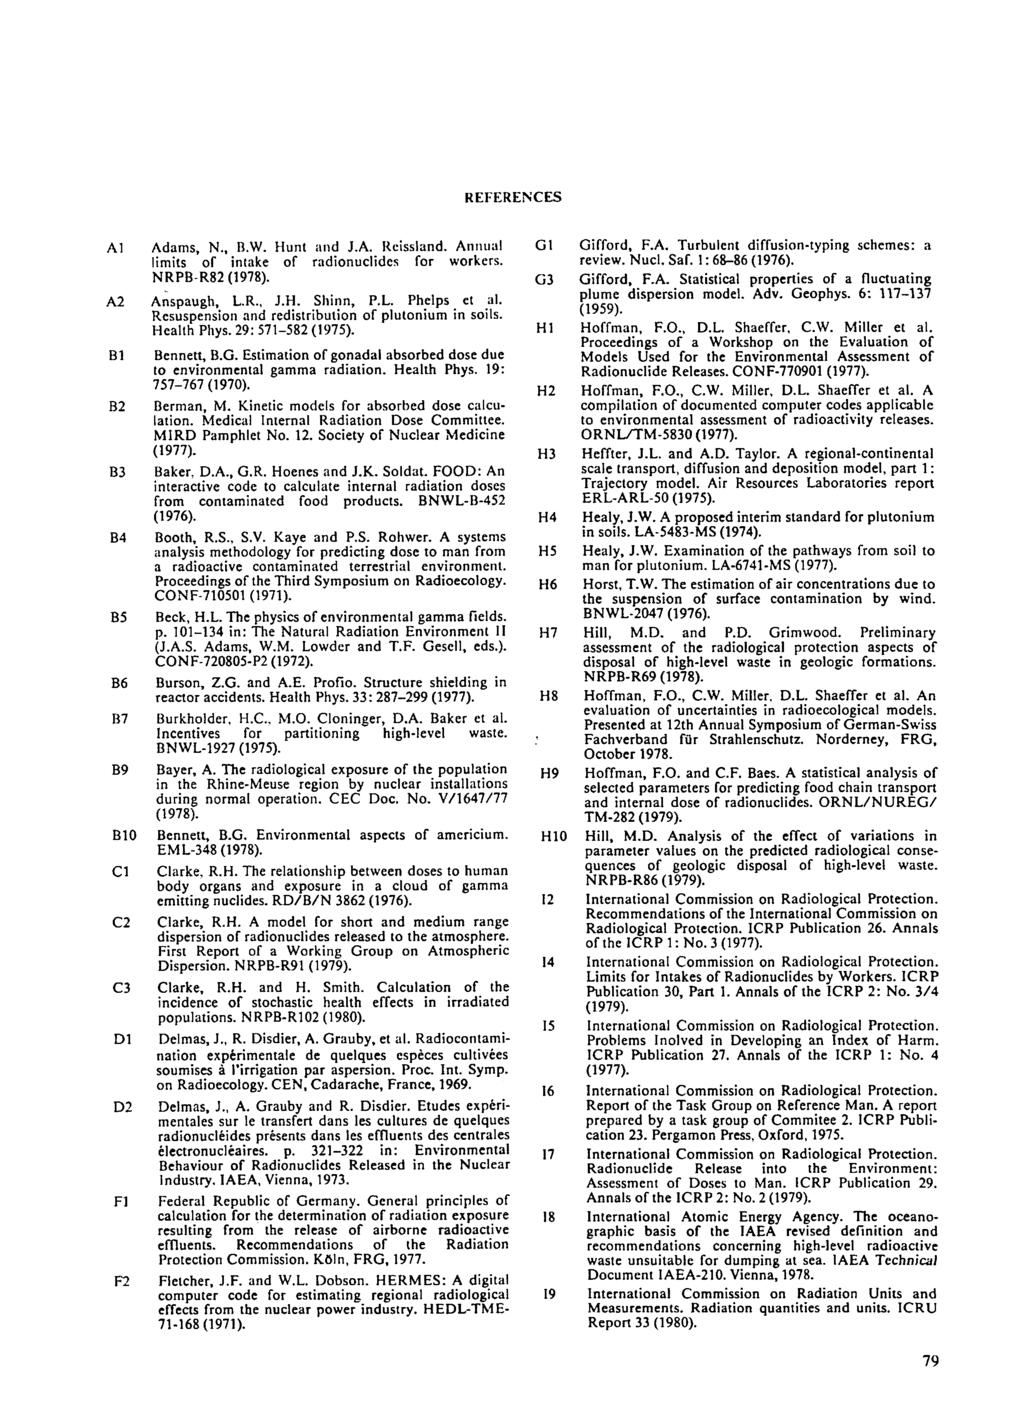 REFERENCES Al Adams, N., Il.W. Hunt and J.A. Rcissland. Annual limits of intake of radionuclidcs for workers. NRPB-R82 (1978). A2 A~spaugh, L.R., J.H. Shinn, P.L. Phelps et al.